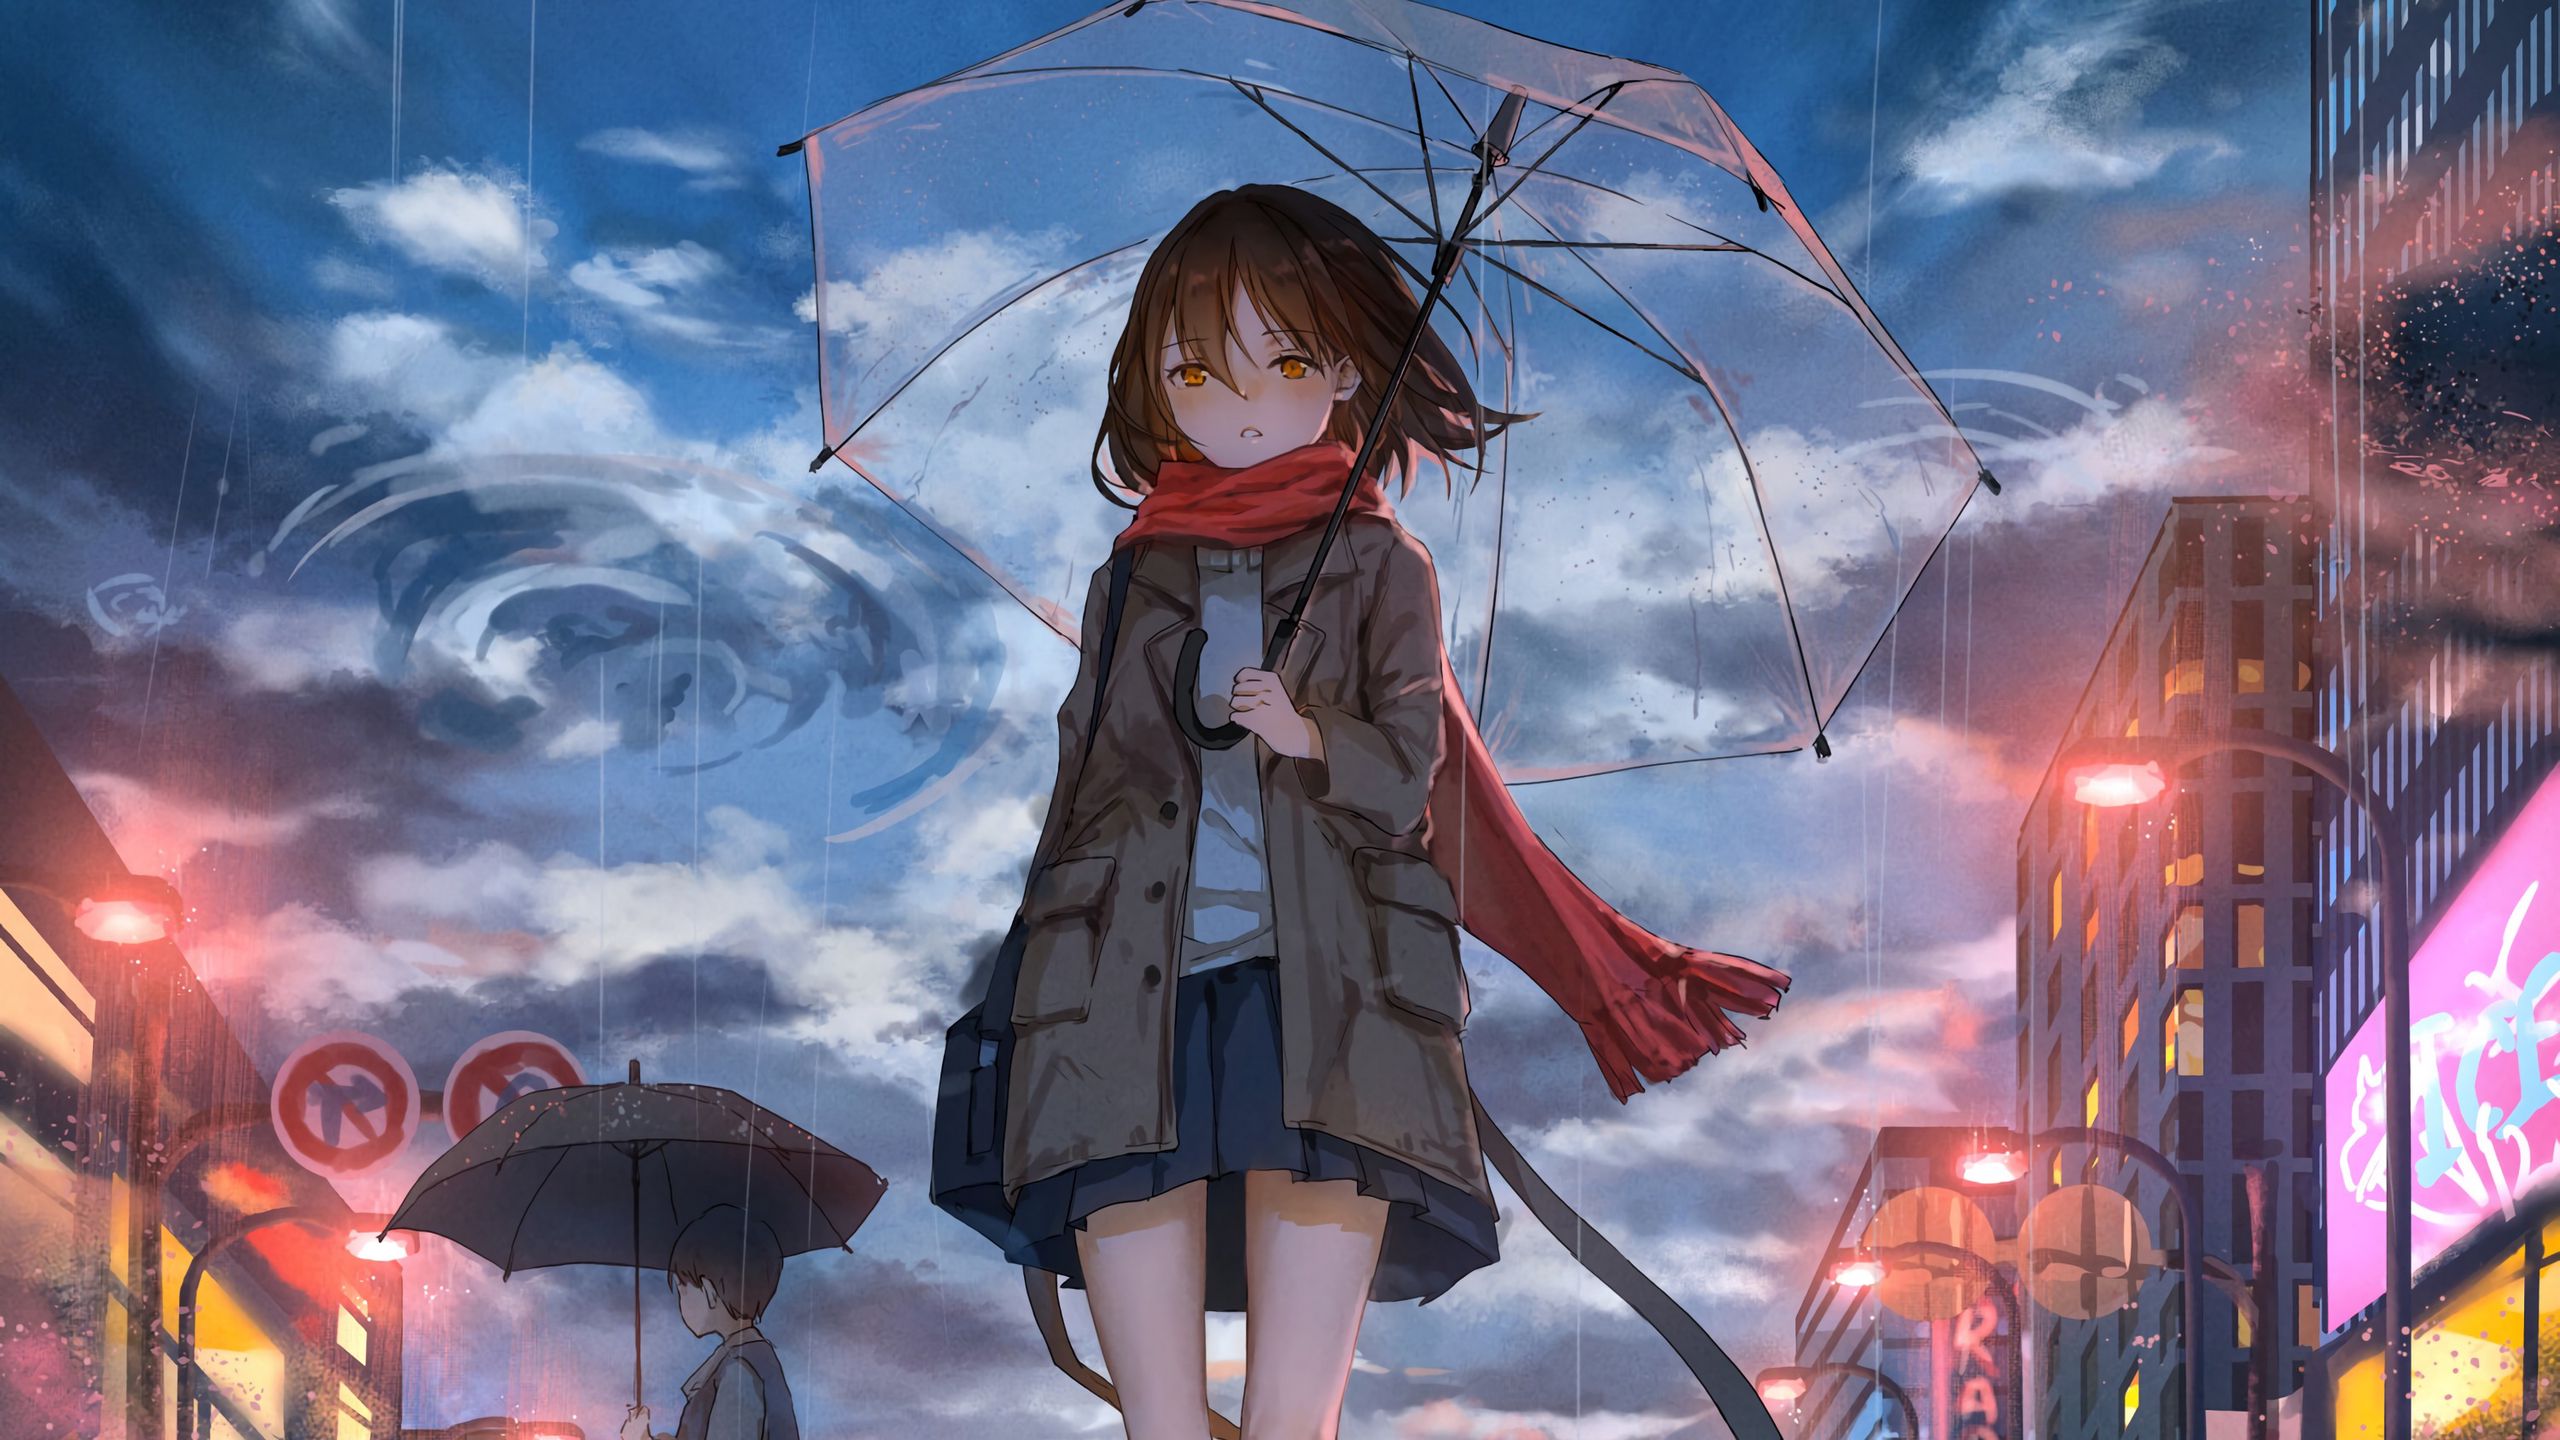 Download wallpaper 2560x1440 girl, umbrella, anime, rain, sadness ...